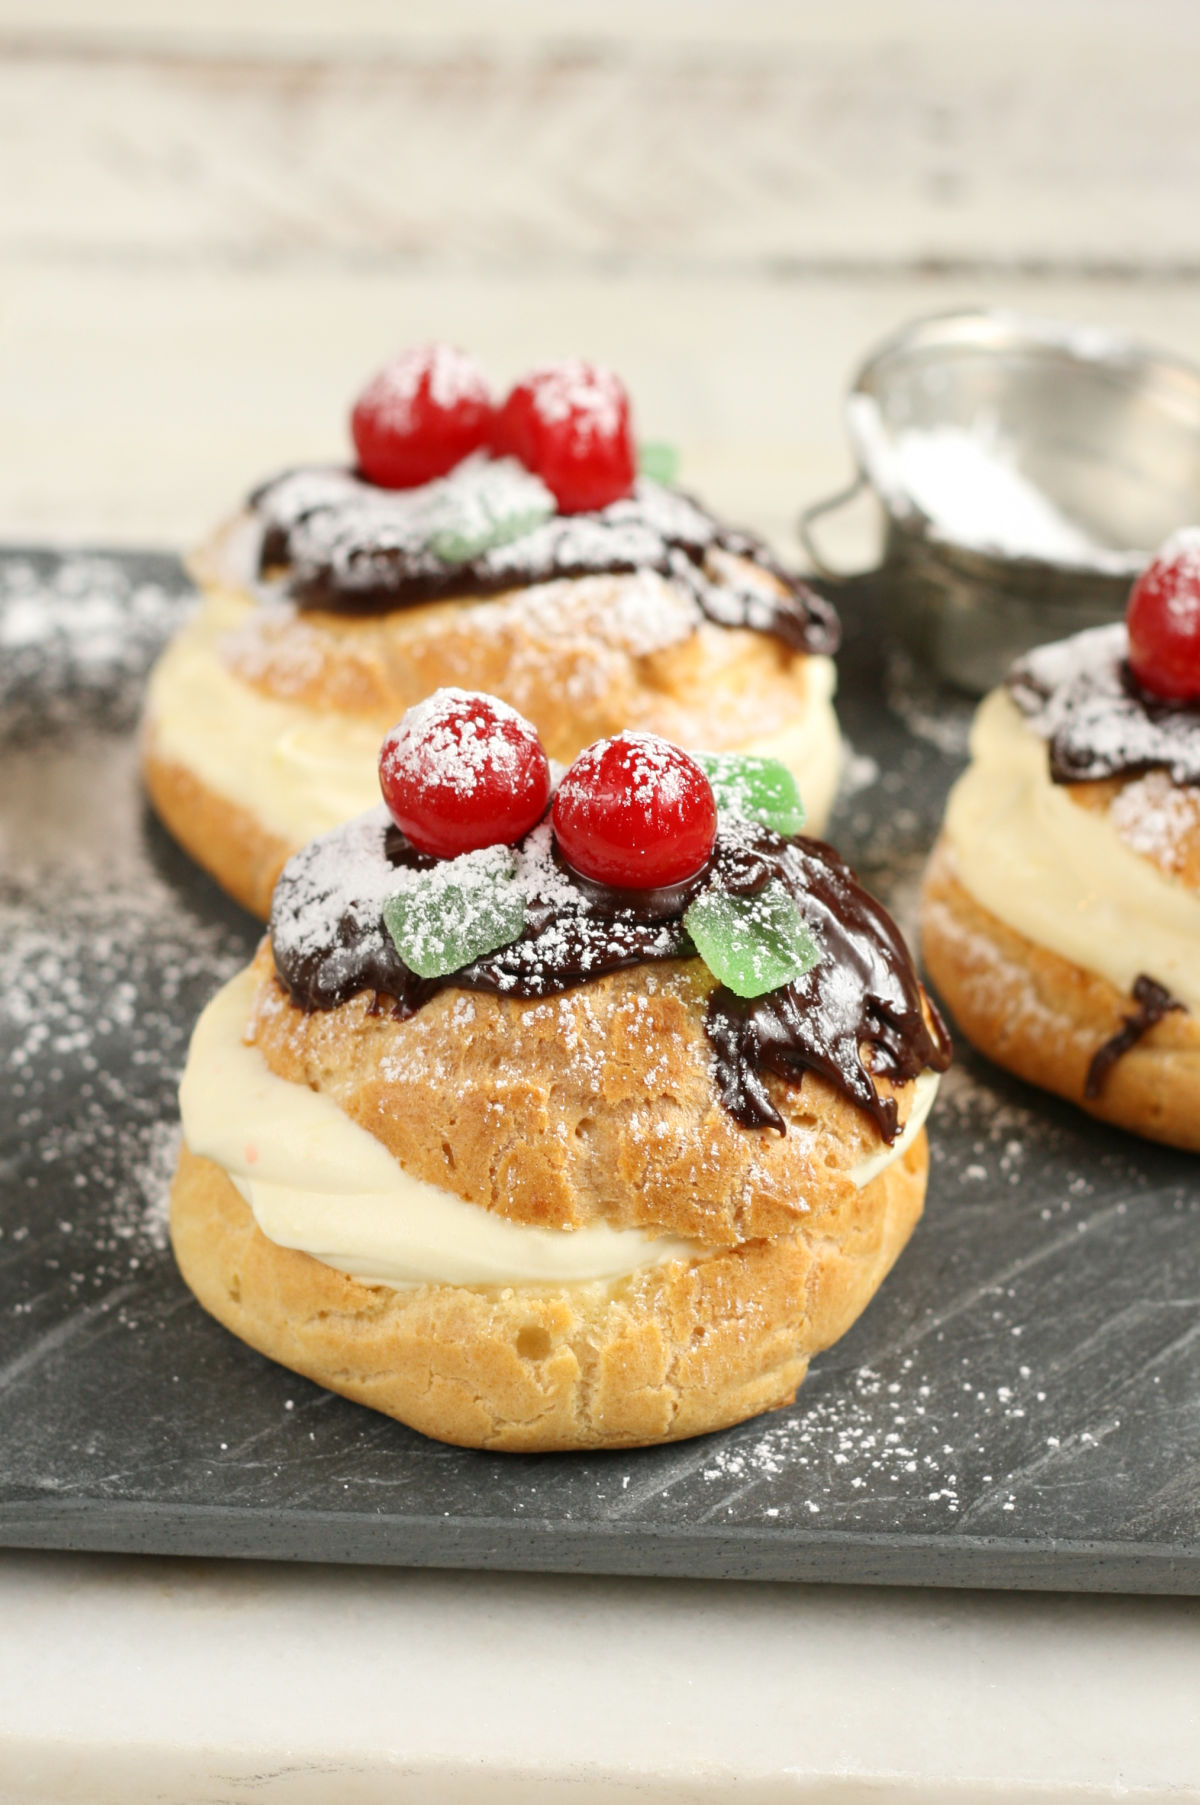 Cream puffs topped with chocolate ganache, maraschino cherries, mint candies, powdered sugar.